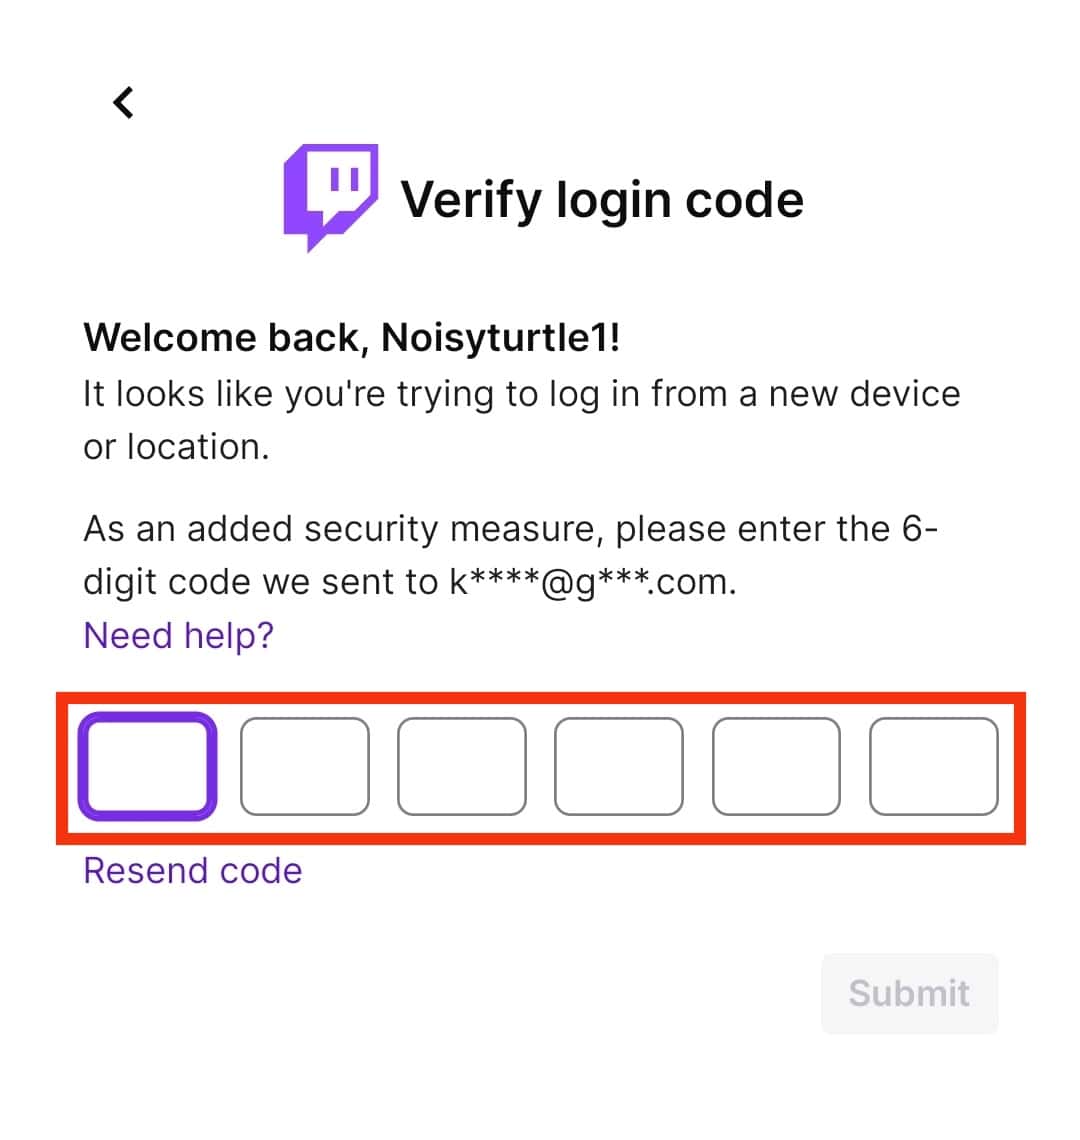 Enter The Verification Code